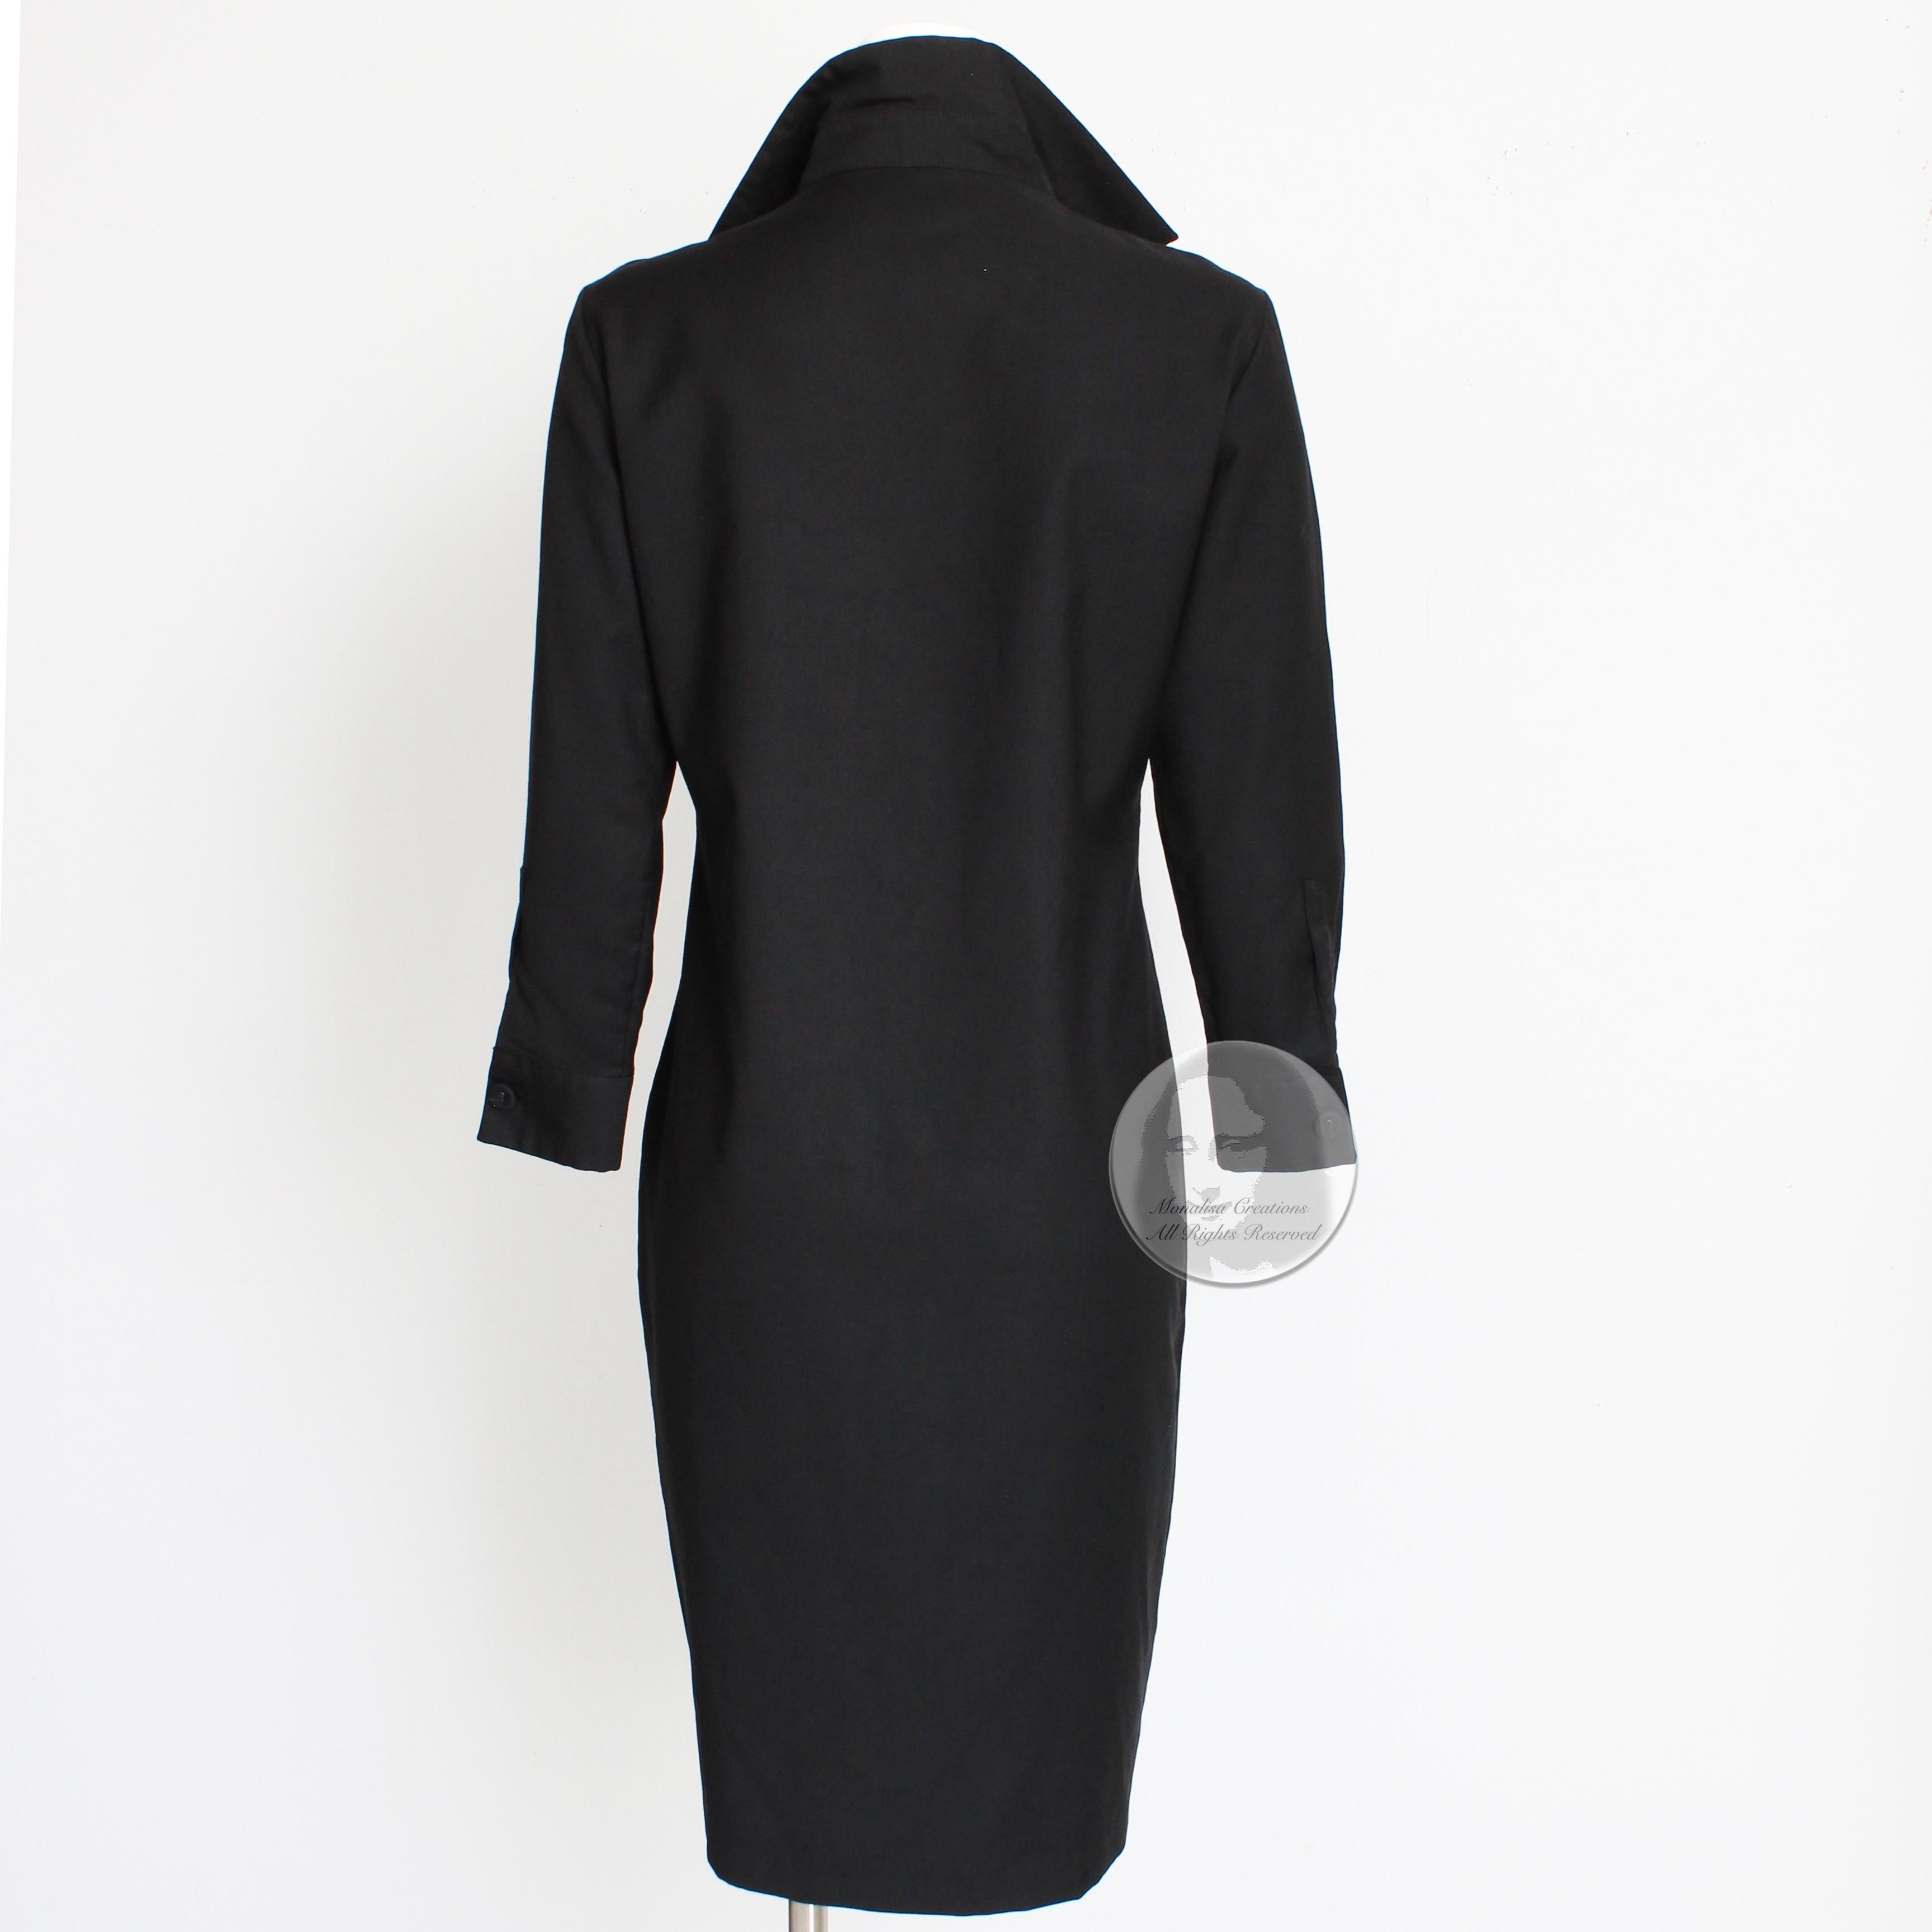 Bottega Veneta Dress Black Wool Twill Shirtwaist Button Front Sz 42 LBD Italy 4